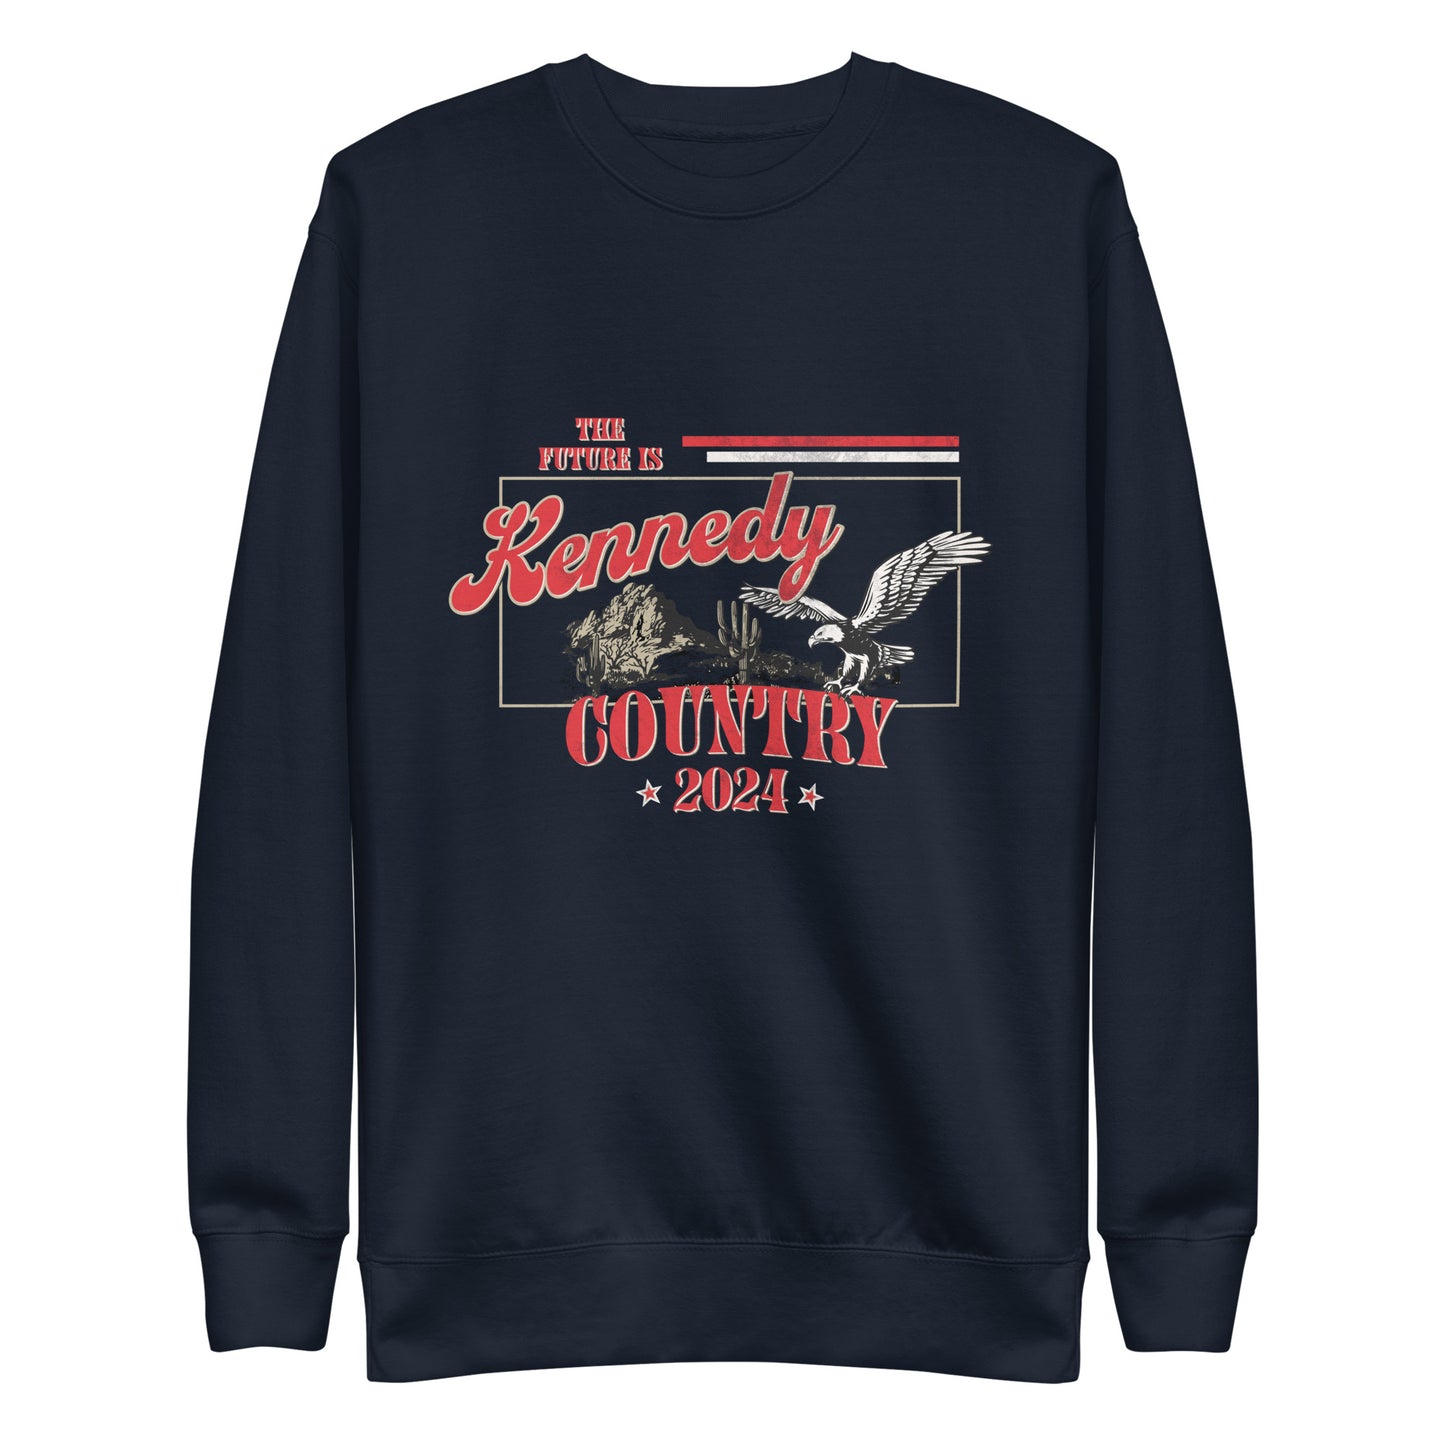 Kennedy Country Unisex Premium Sweatshirt